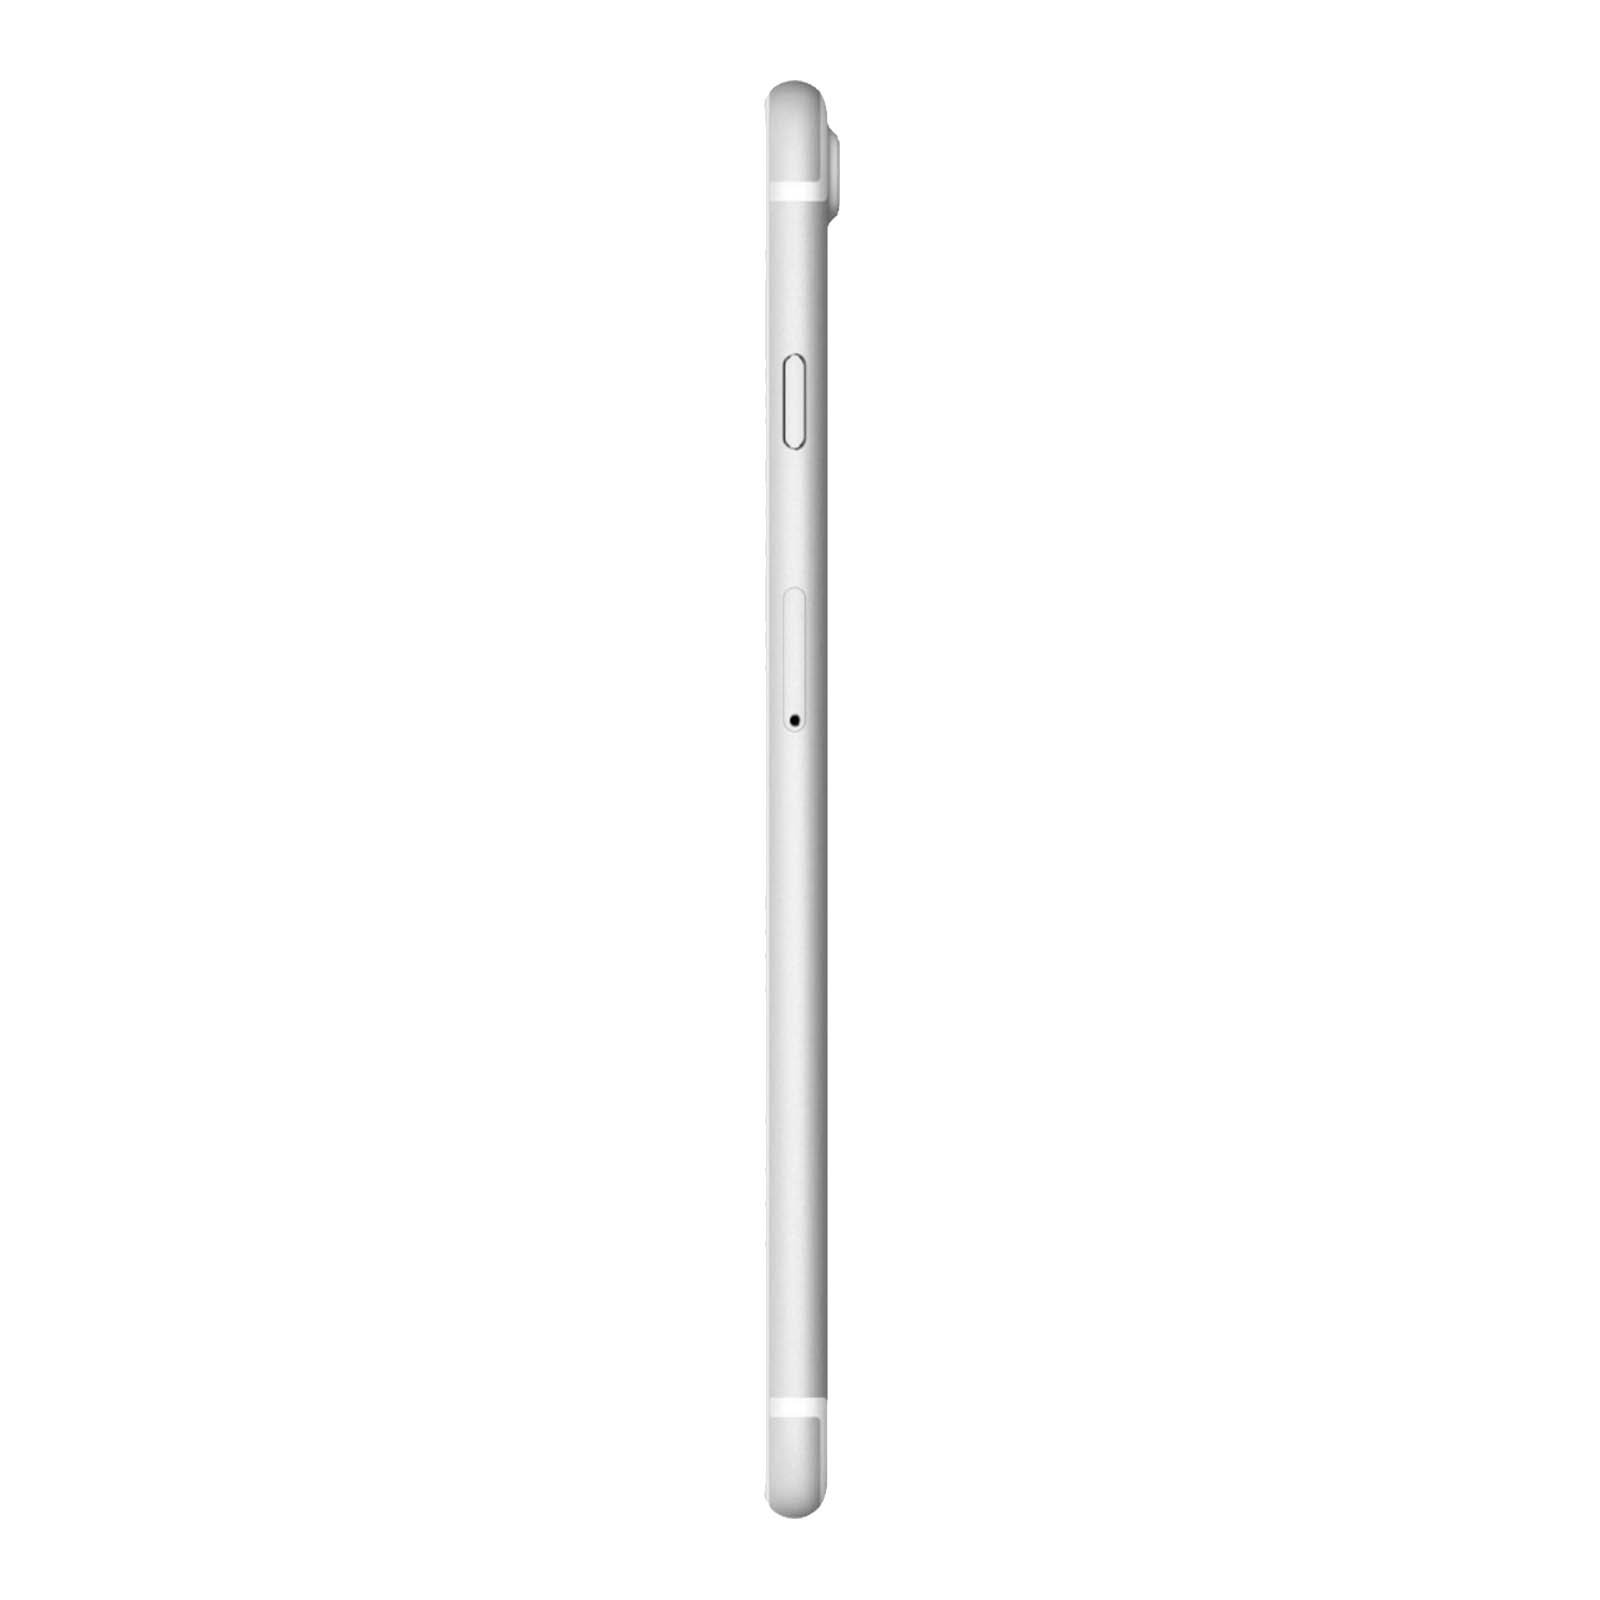 Apple iPhone 7 Plus 256GB Silver Fair - Unlocked